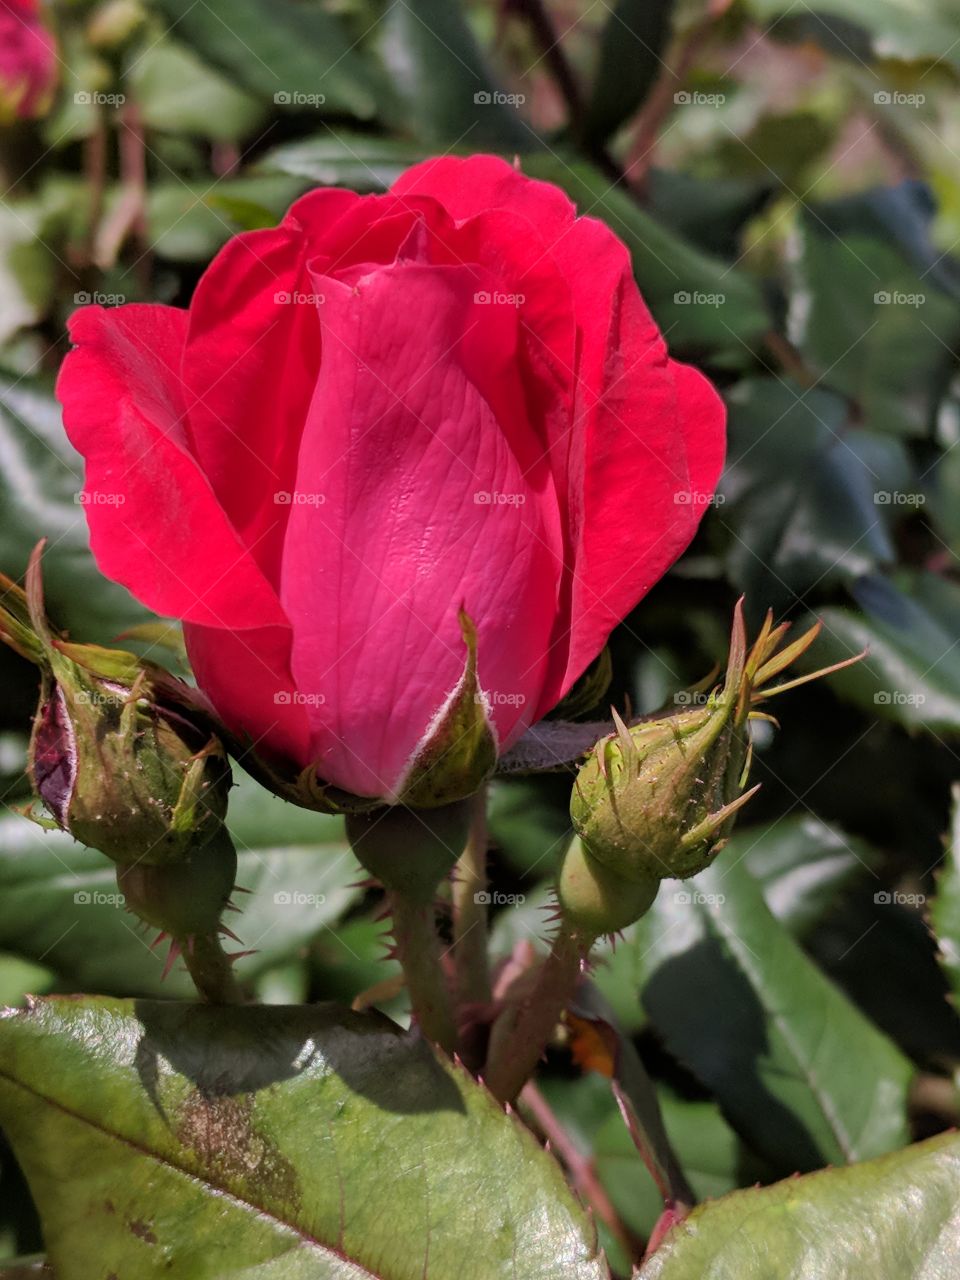 Lovely blooming rose